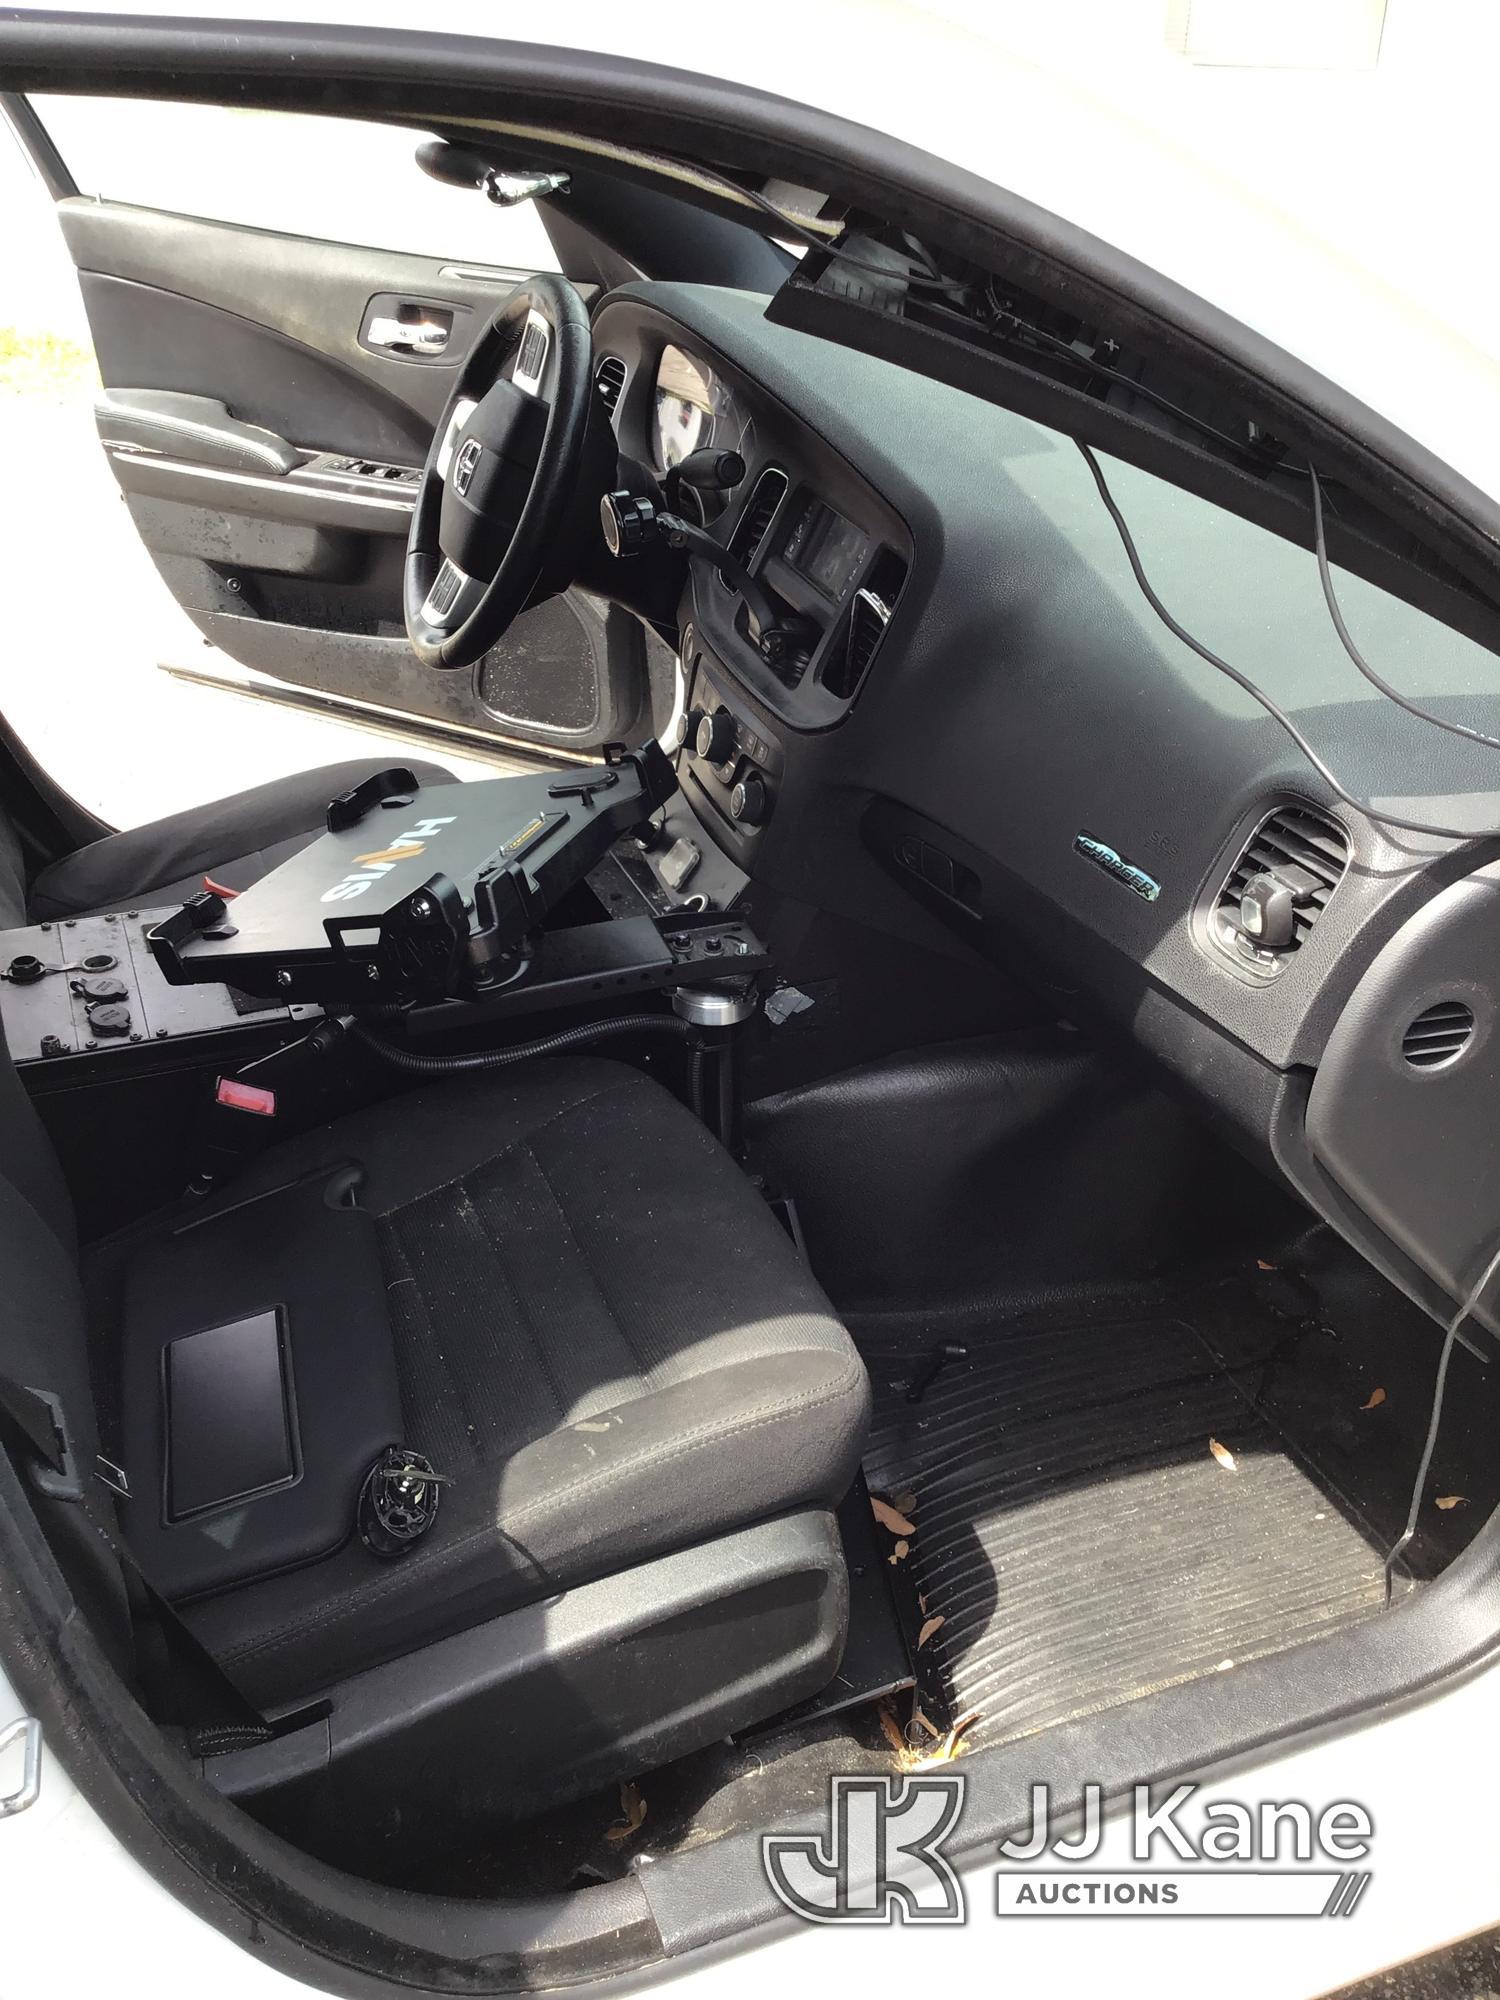 (Ocala, FL) 2012 Dodge Charger Police Package 4-Door Sedan Runs & Moves) (Jump To Start, Minor Body